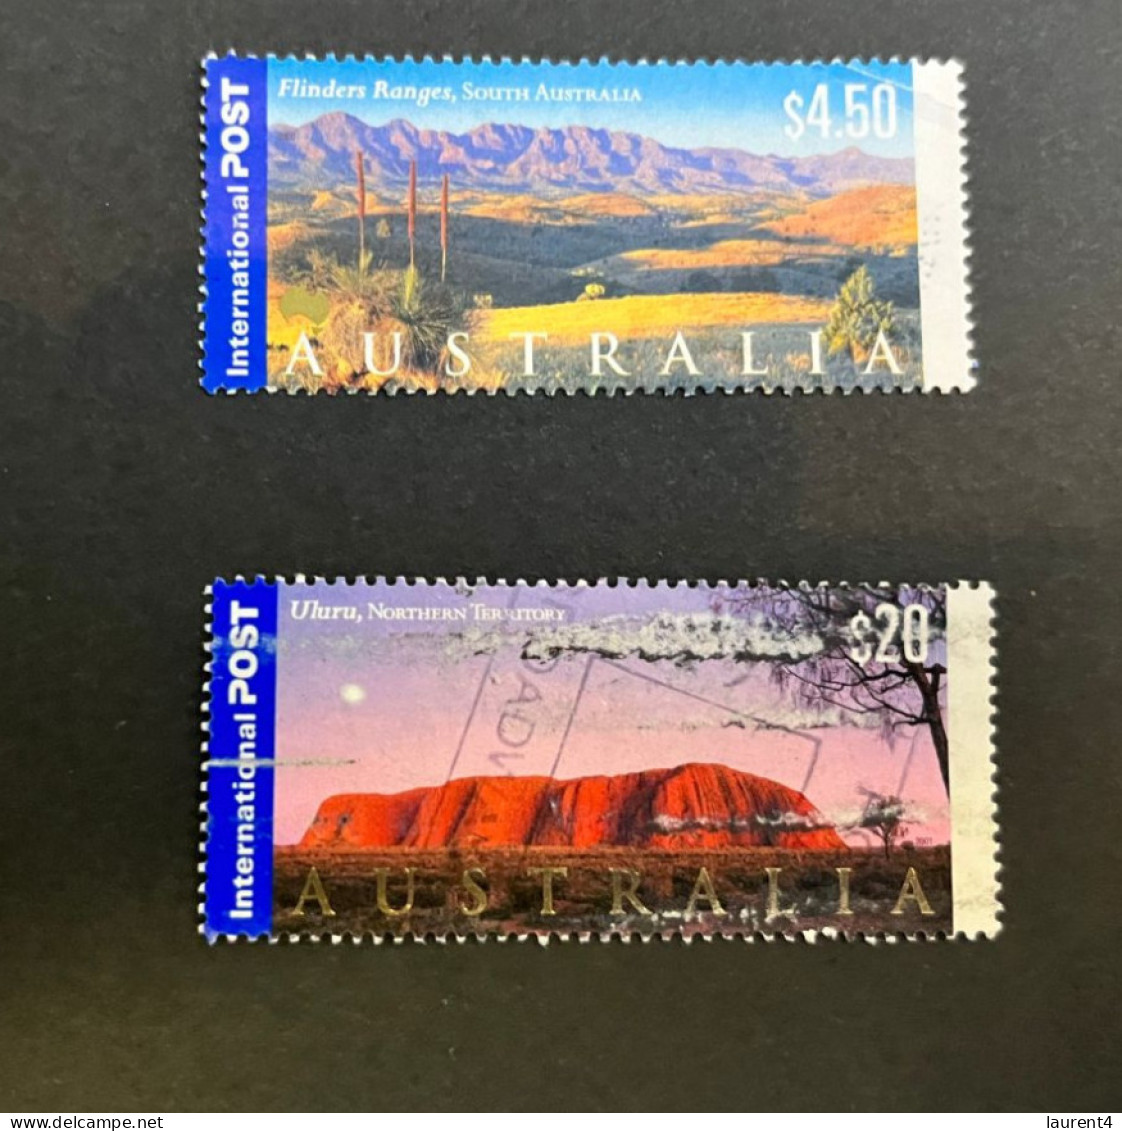 14-5-2024 (stamp) Used / Obliterer - Australia - 2 HIGHER Values Stamps (include $ 20.00 Stamp) - Mint Stamps